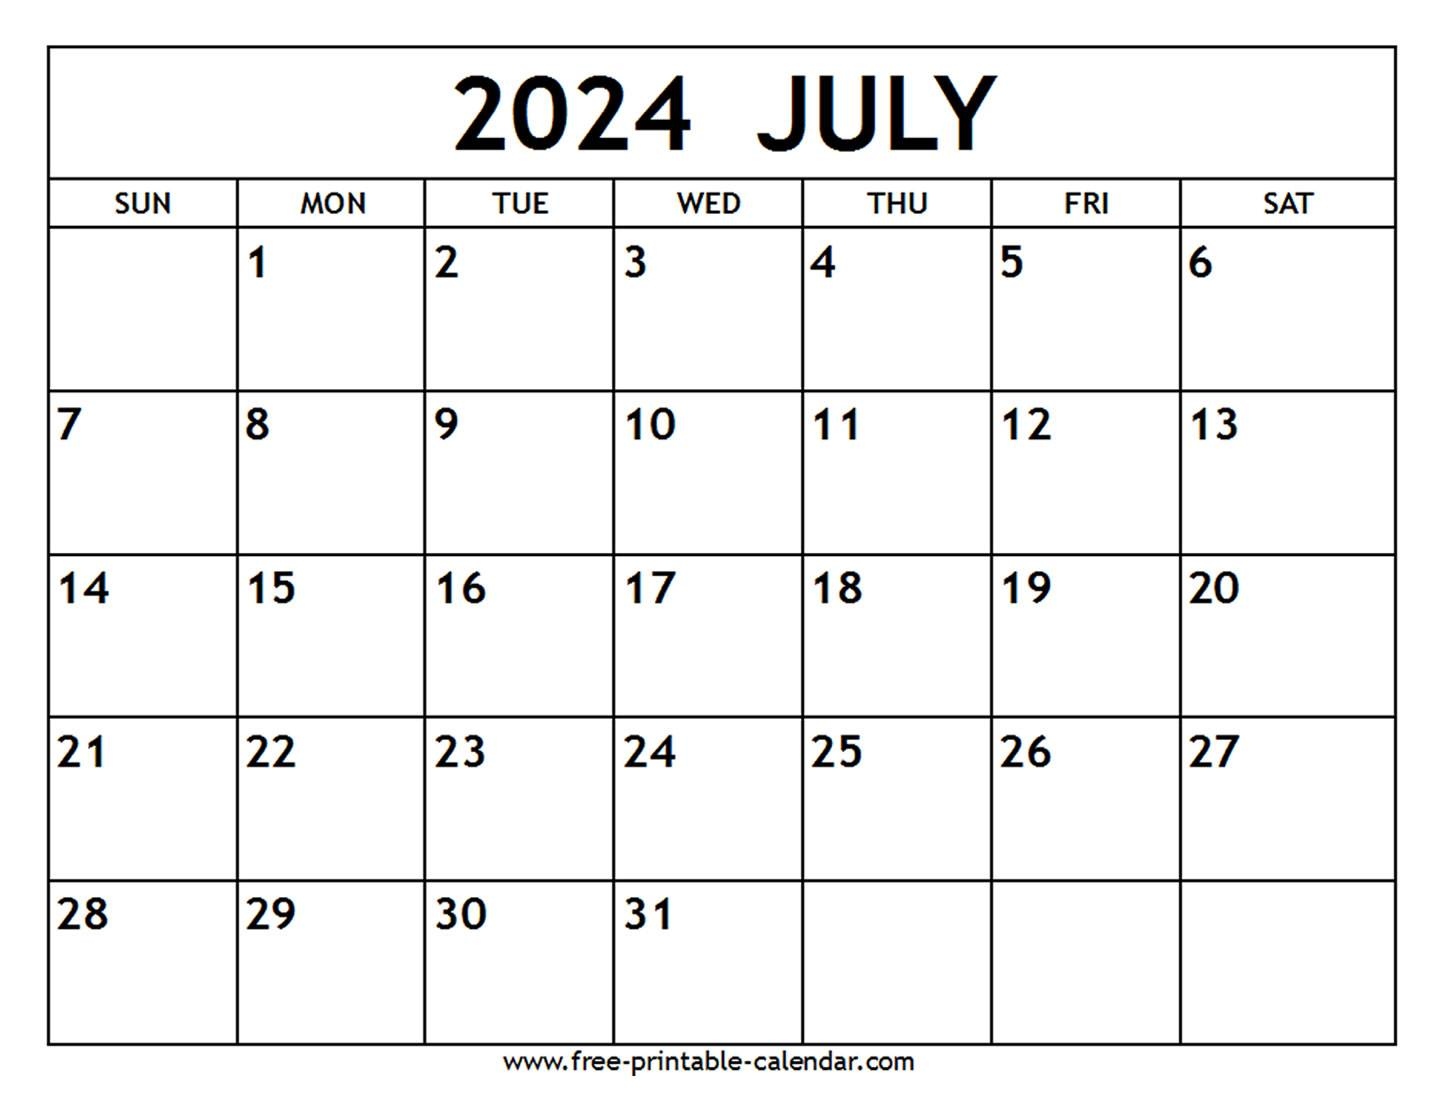 July 2024 Calendar - Free-Printable-Calendar pertaining to Free Printable Calendar 2024 July August